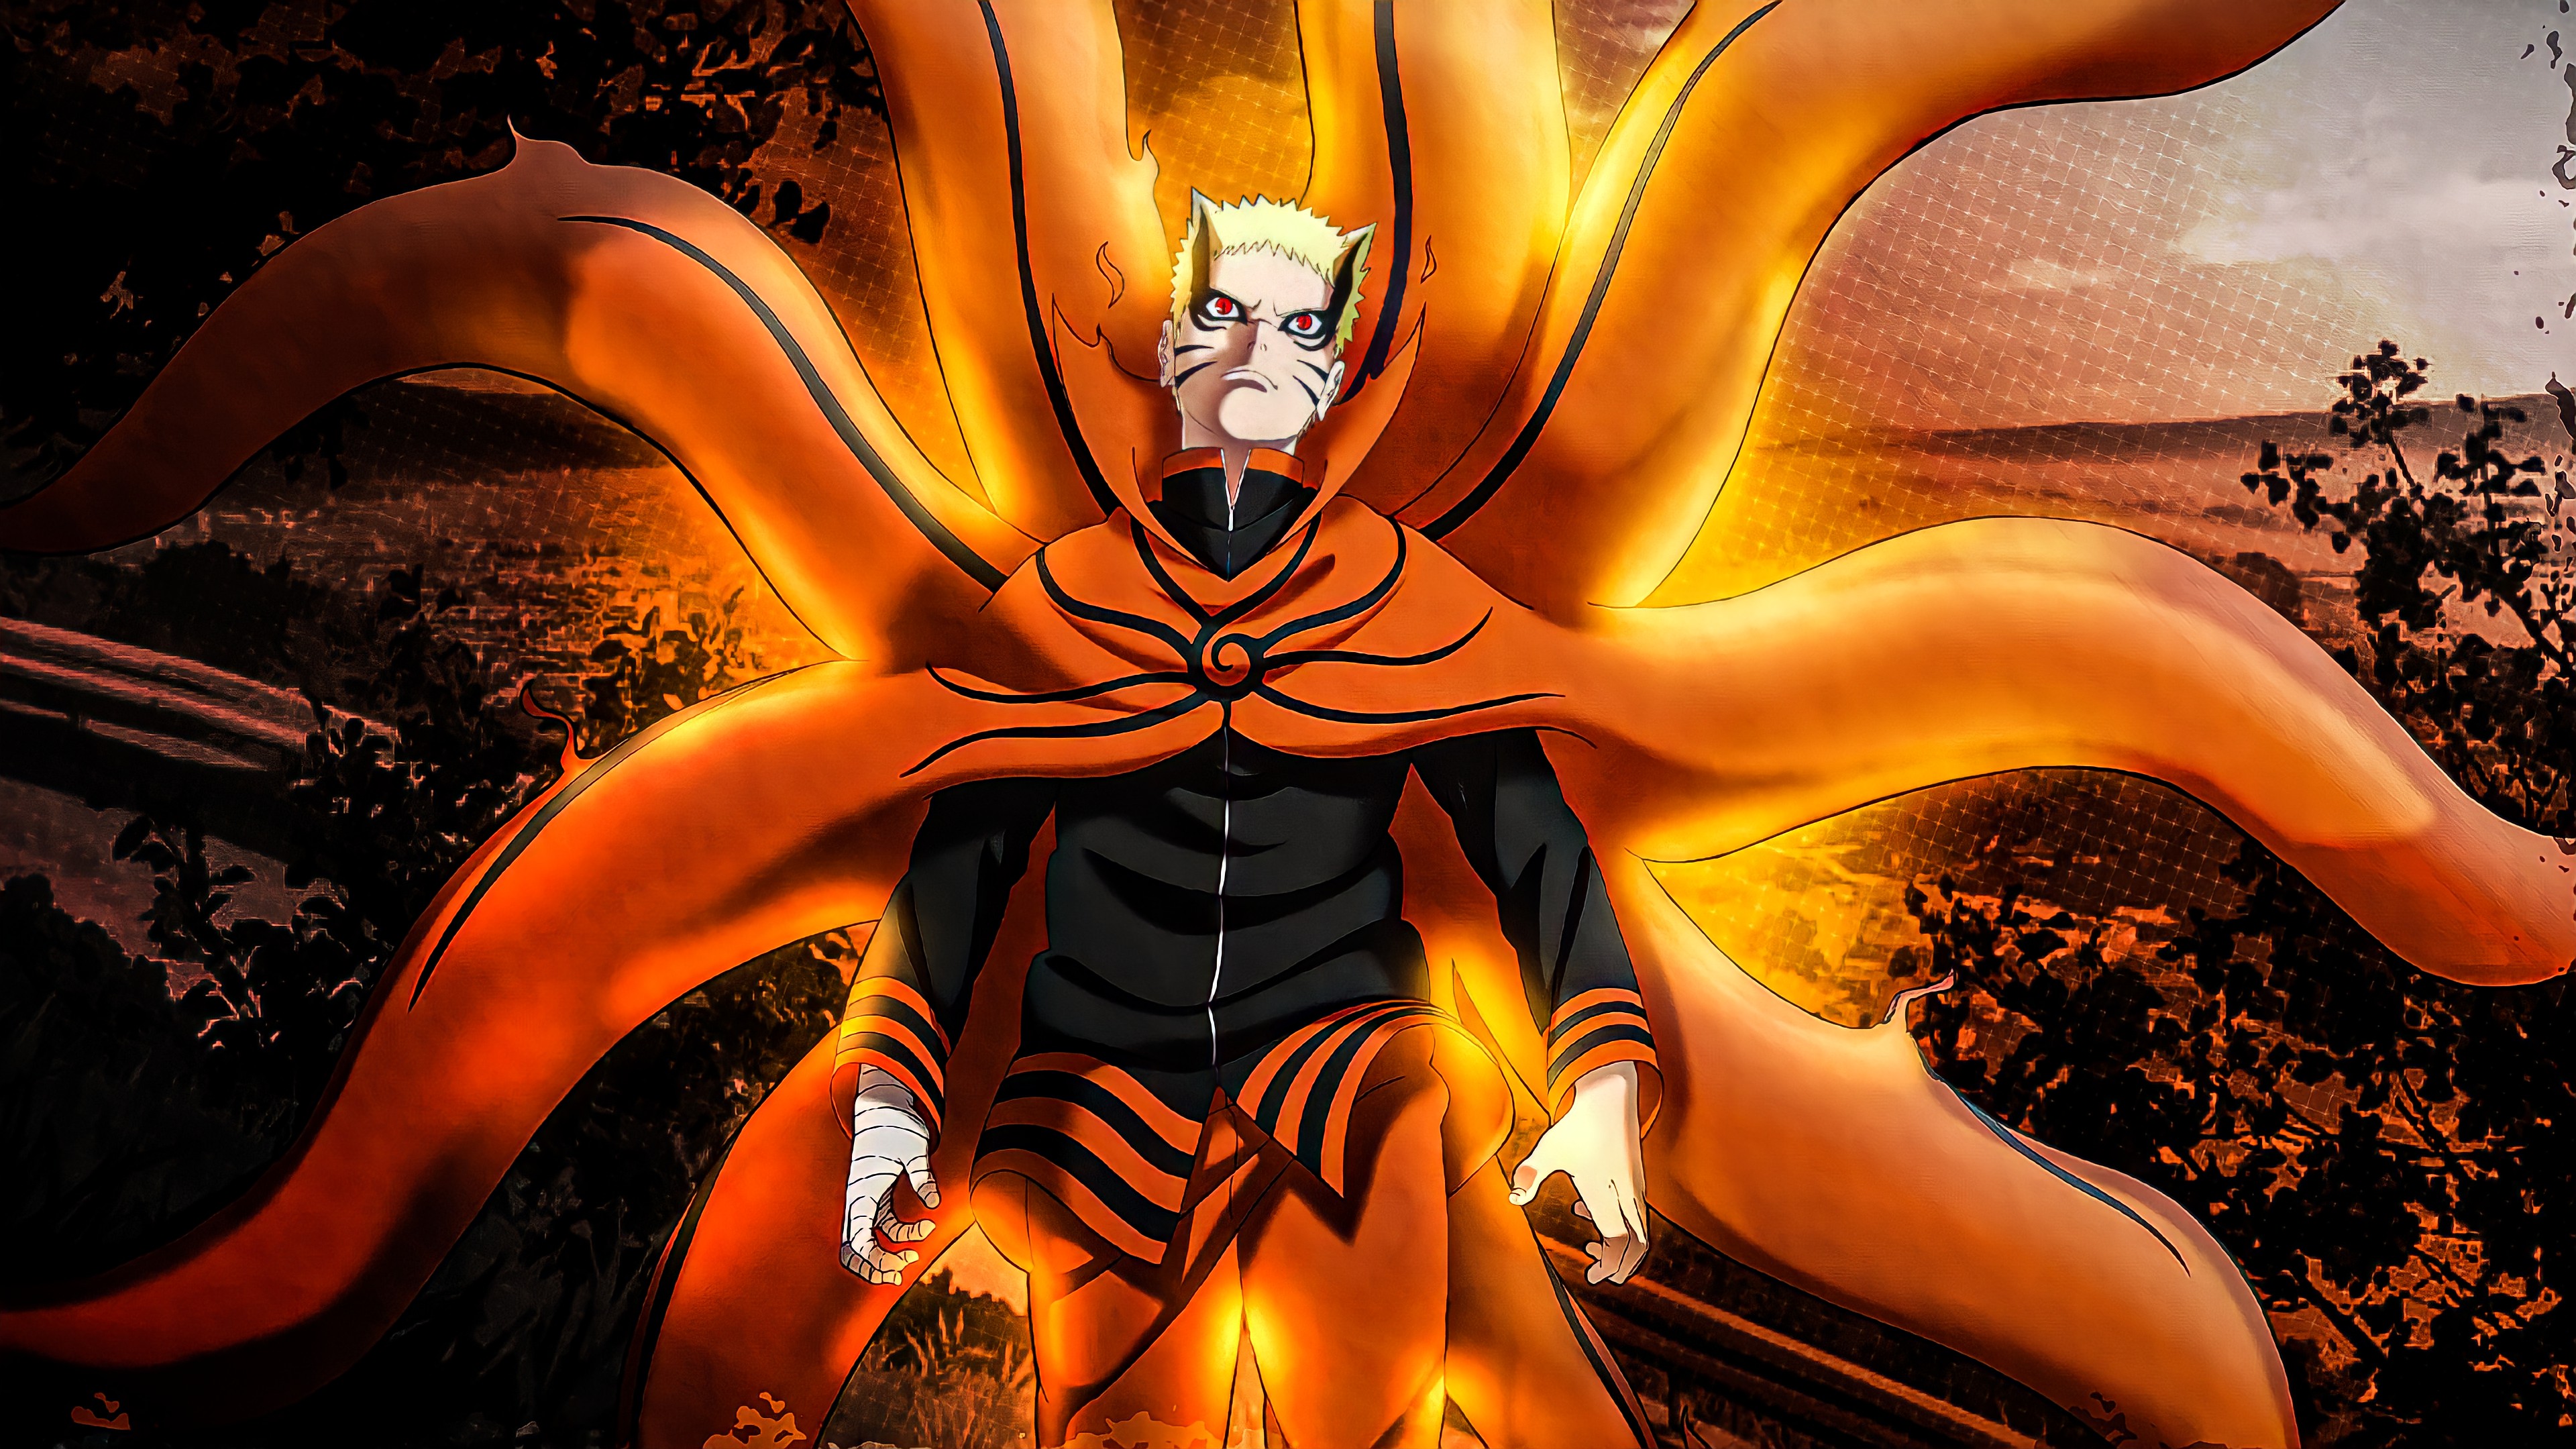 Naruto 4k Ultra HD Wallpaper Background Image